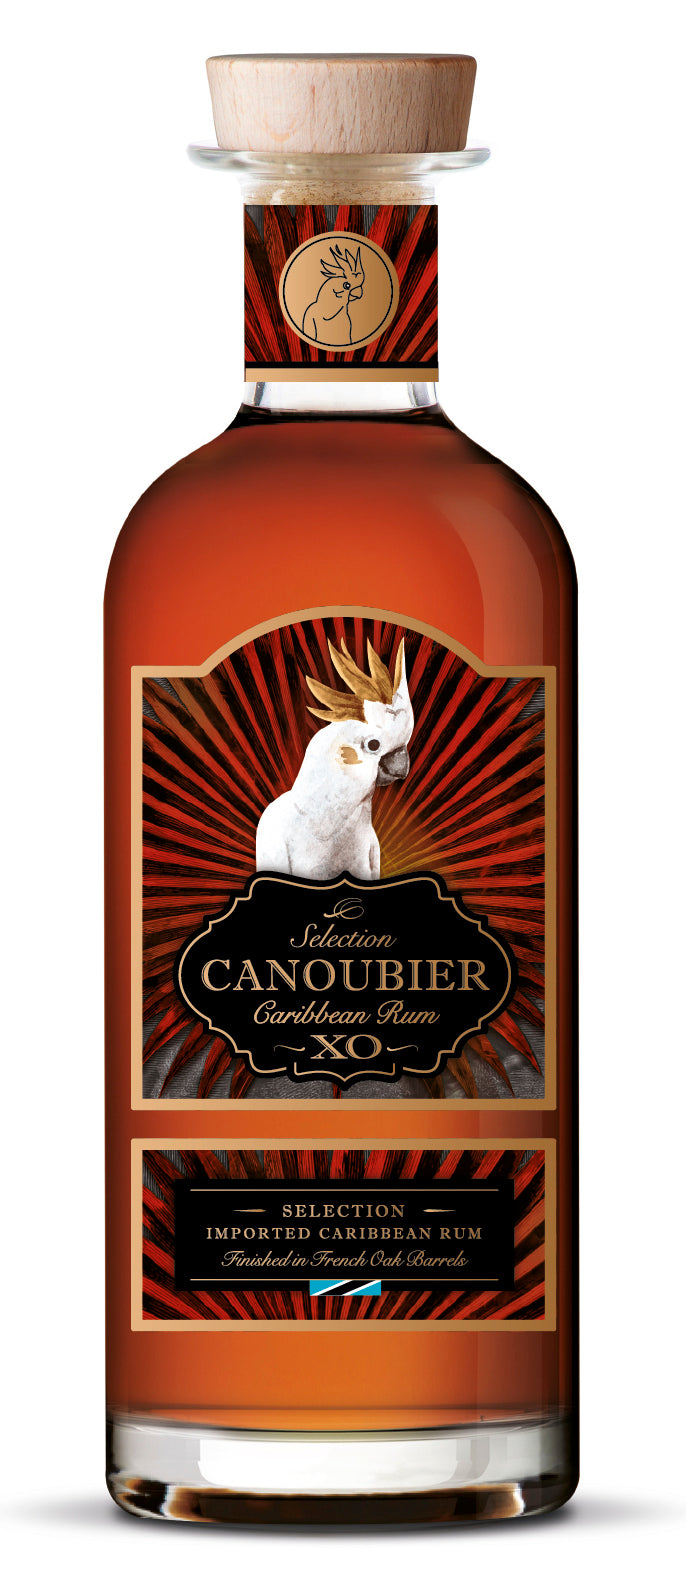 RHUM CANOUBIER XO, Distillé et Vieilli aux Caraibes, 70cl